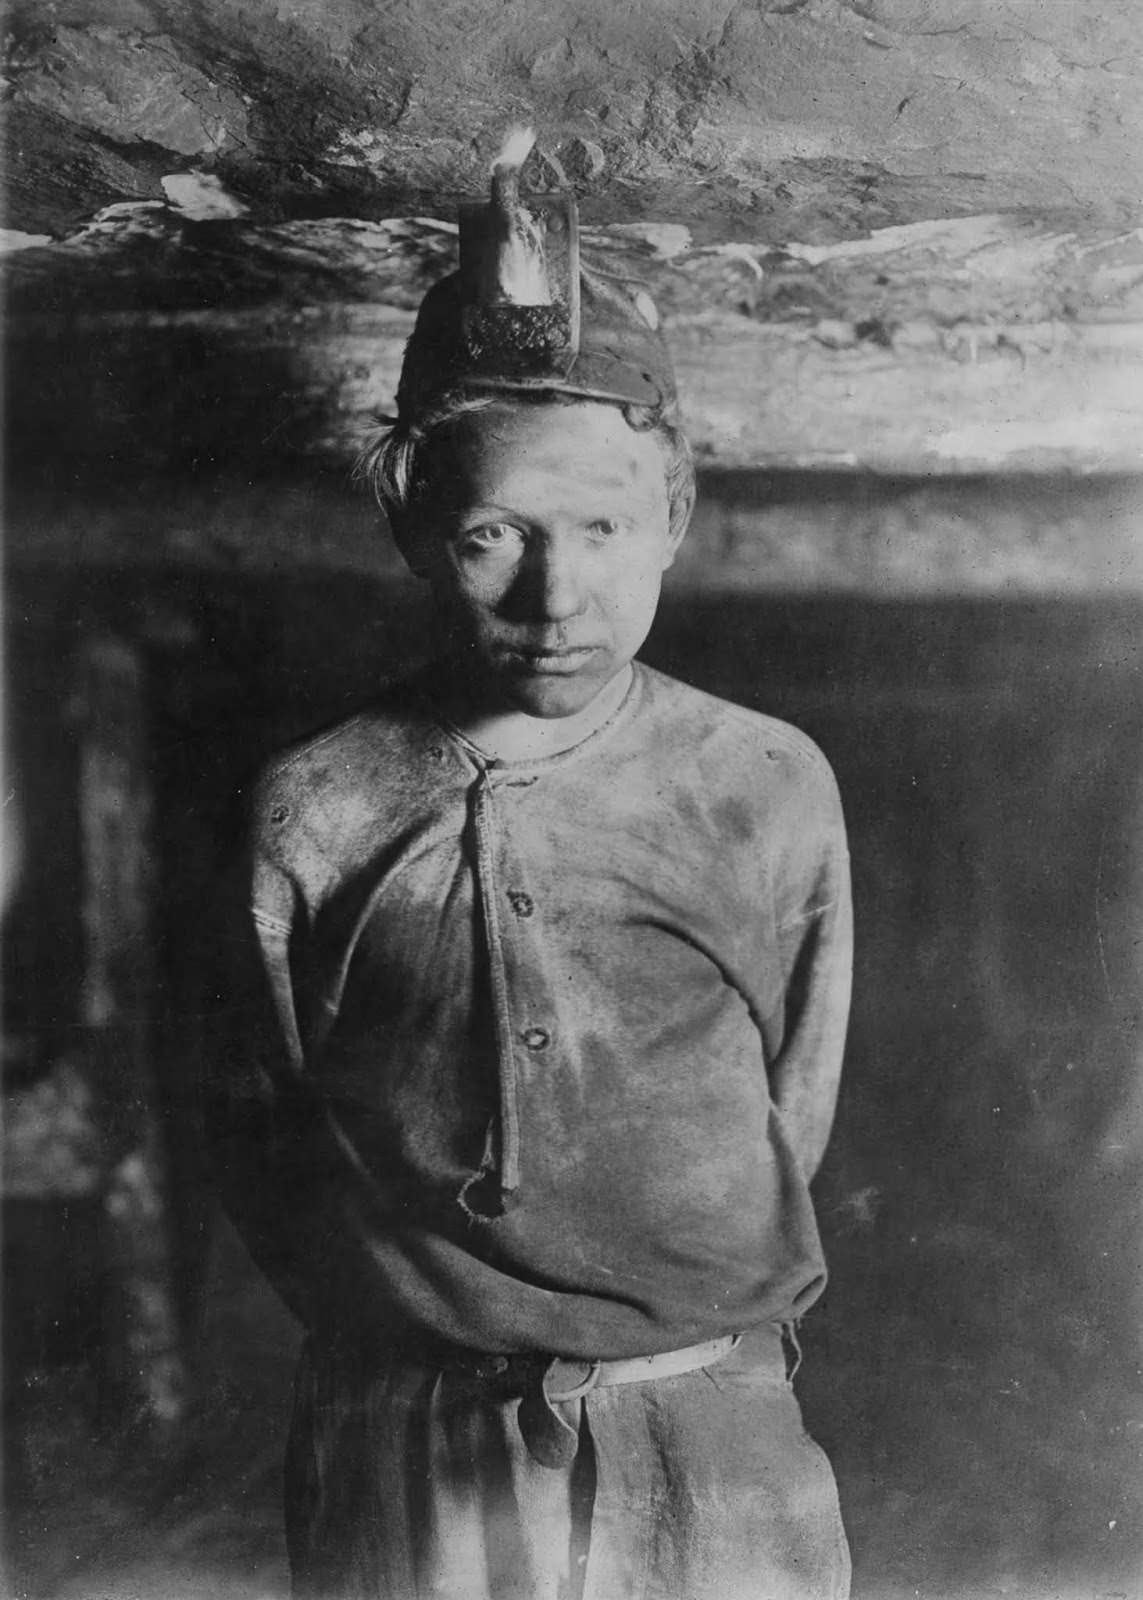 A trapper boy, one mile inside Turkey Knob Mine in Macdonald, West Virginia, 1908